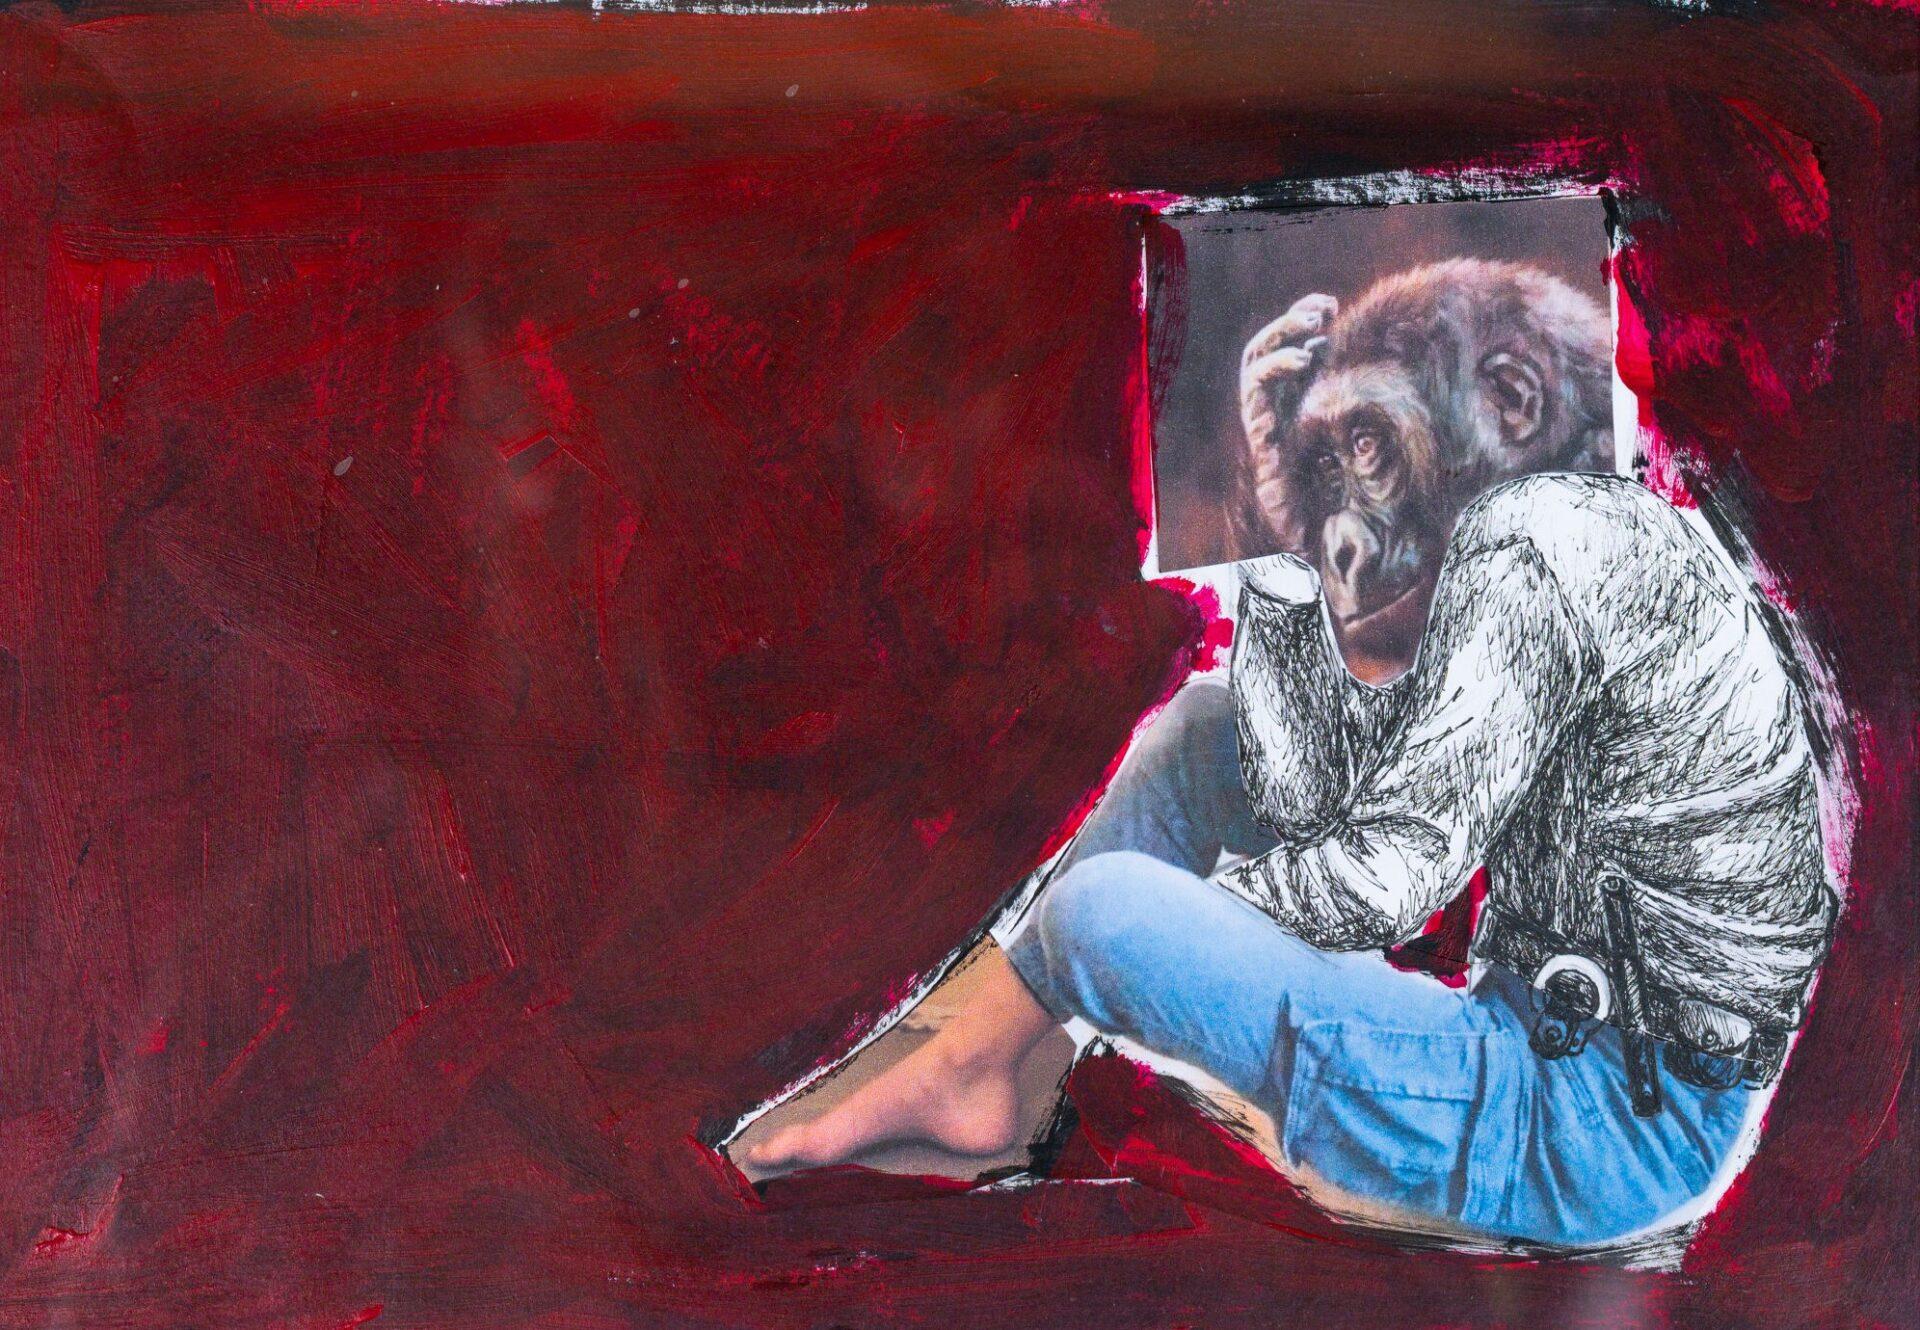 Monkey on the street - Painting by Belinda Salden